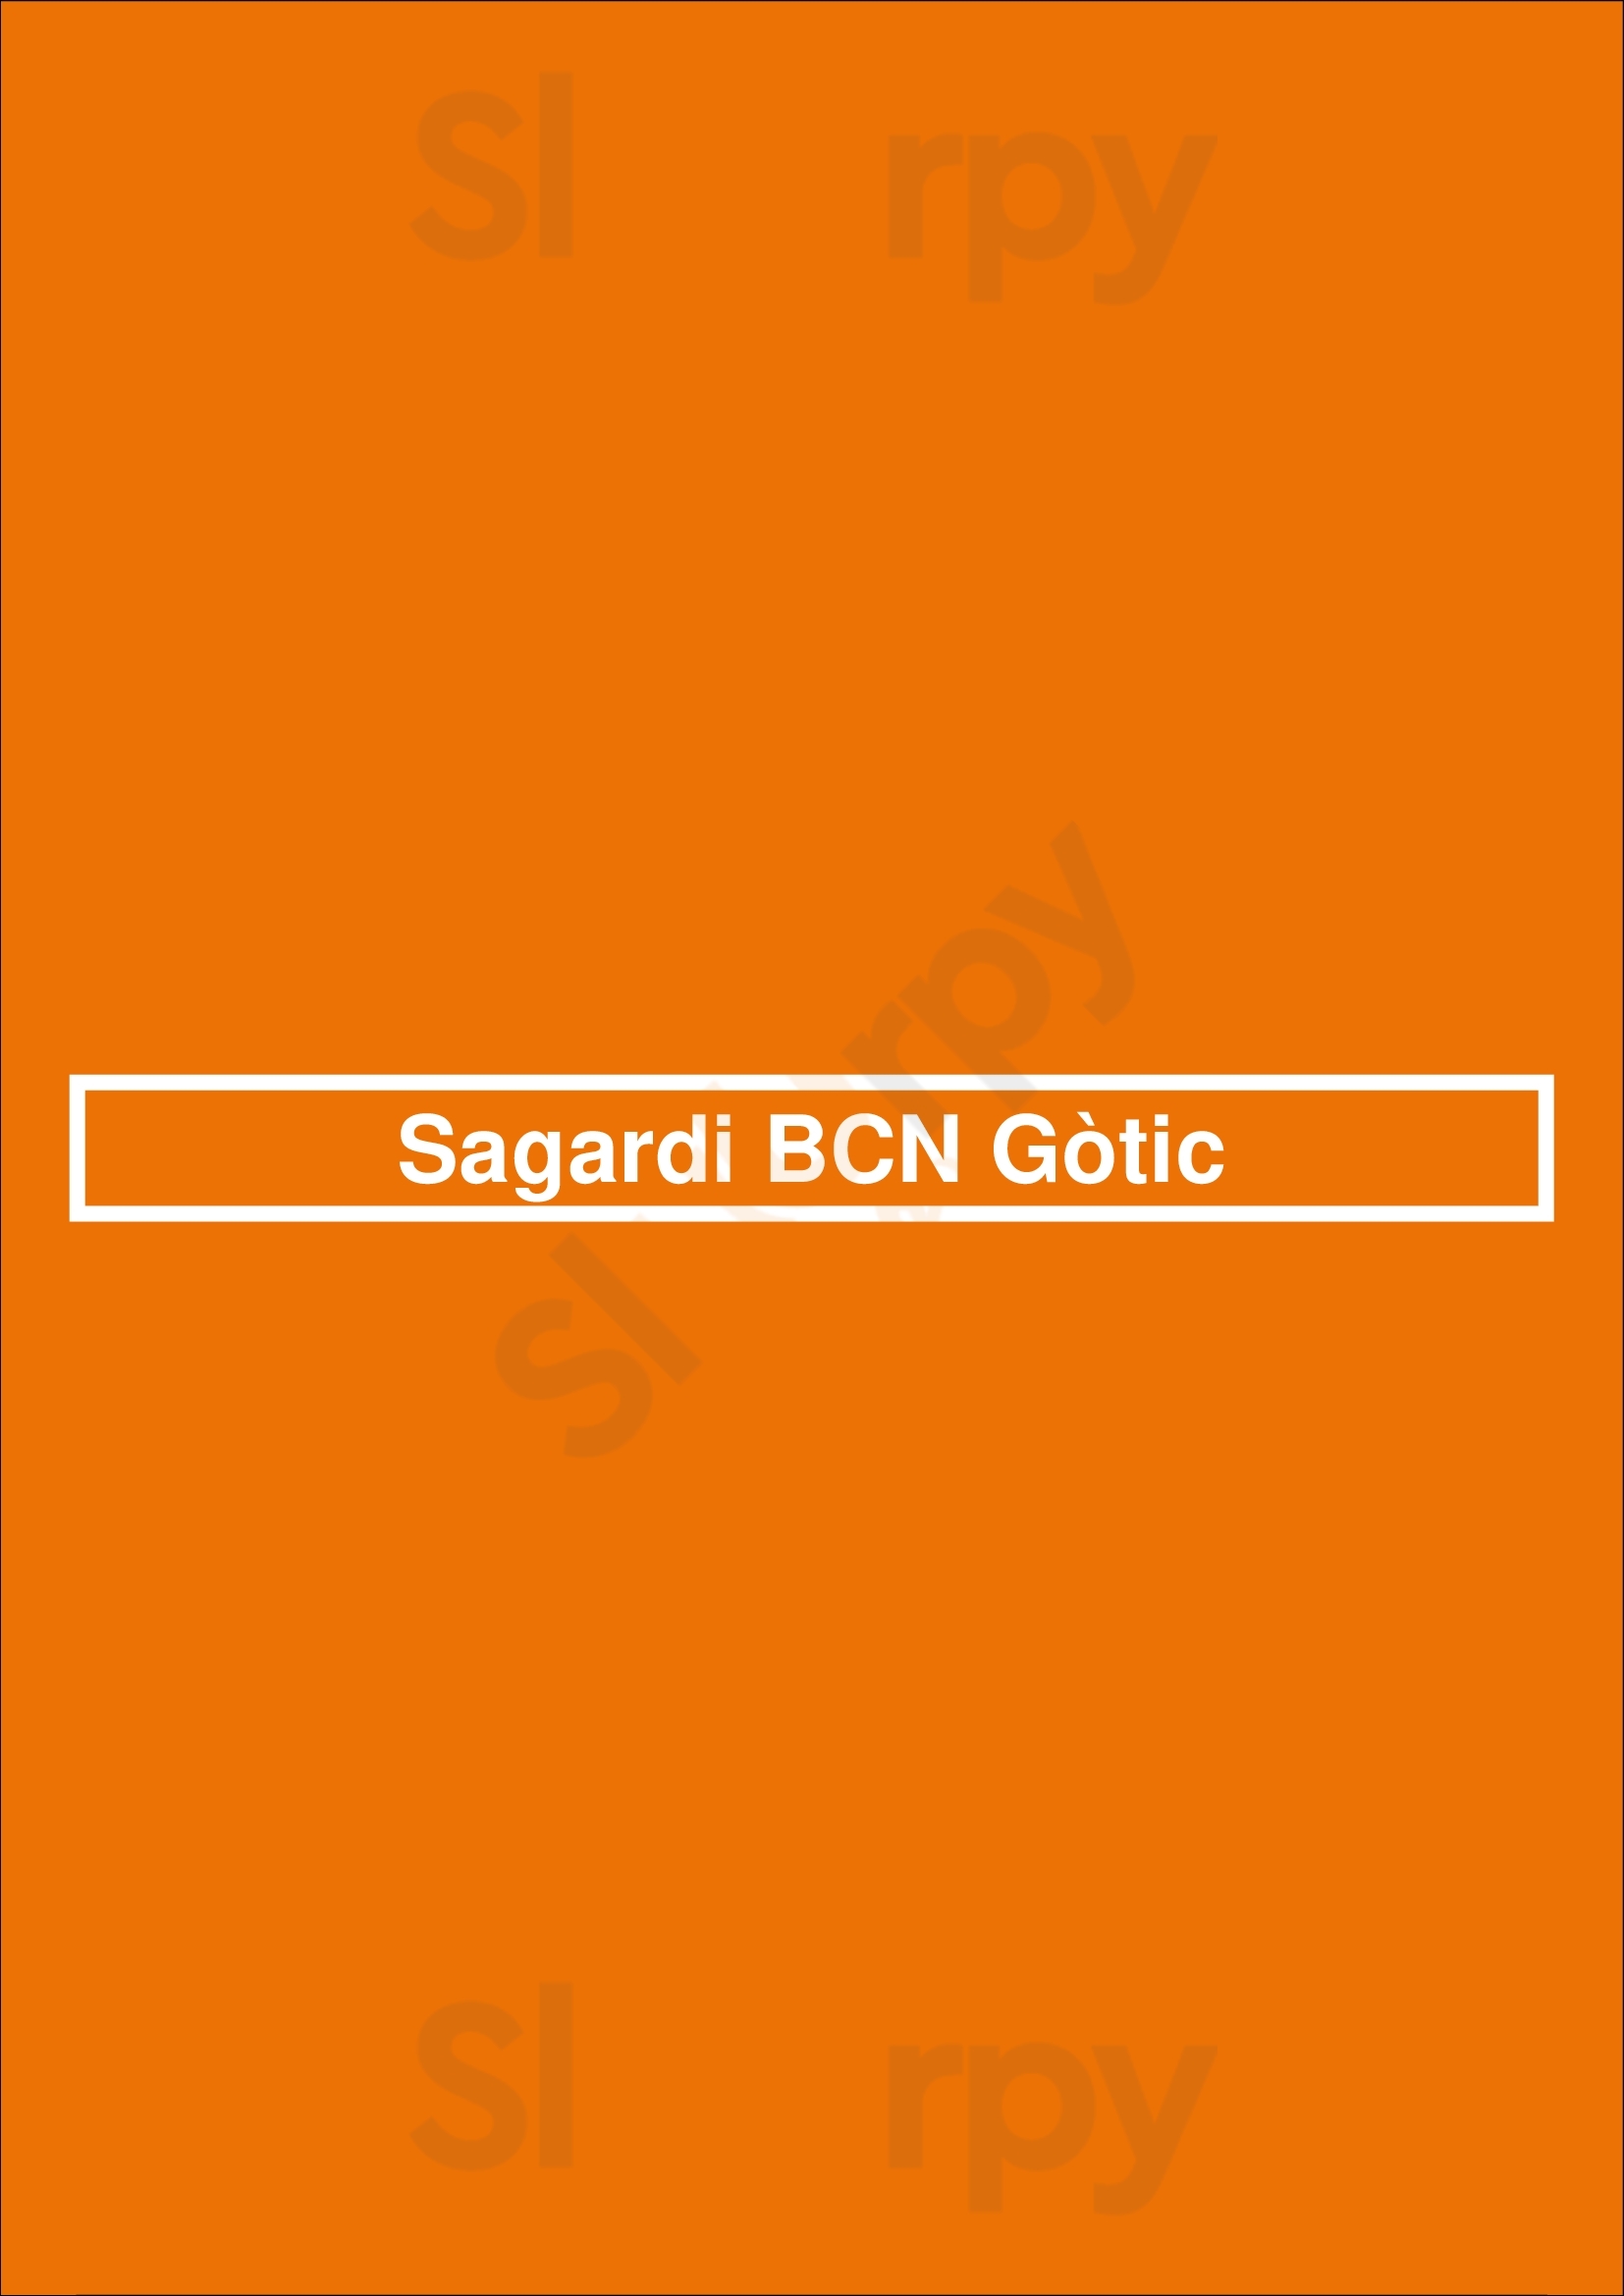 Sagardi Bcn Gòtic Barcelona Menu - 1